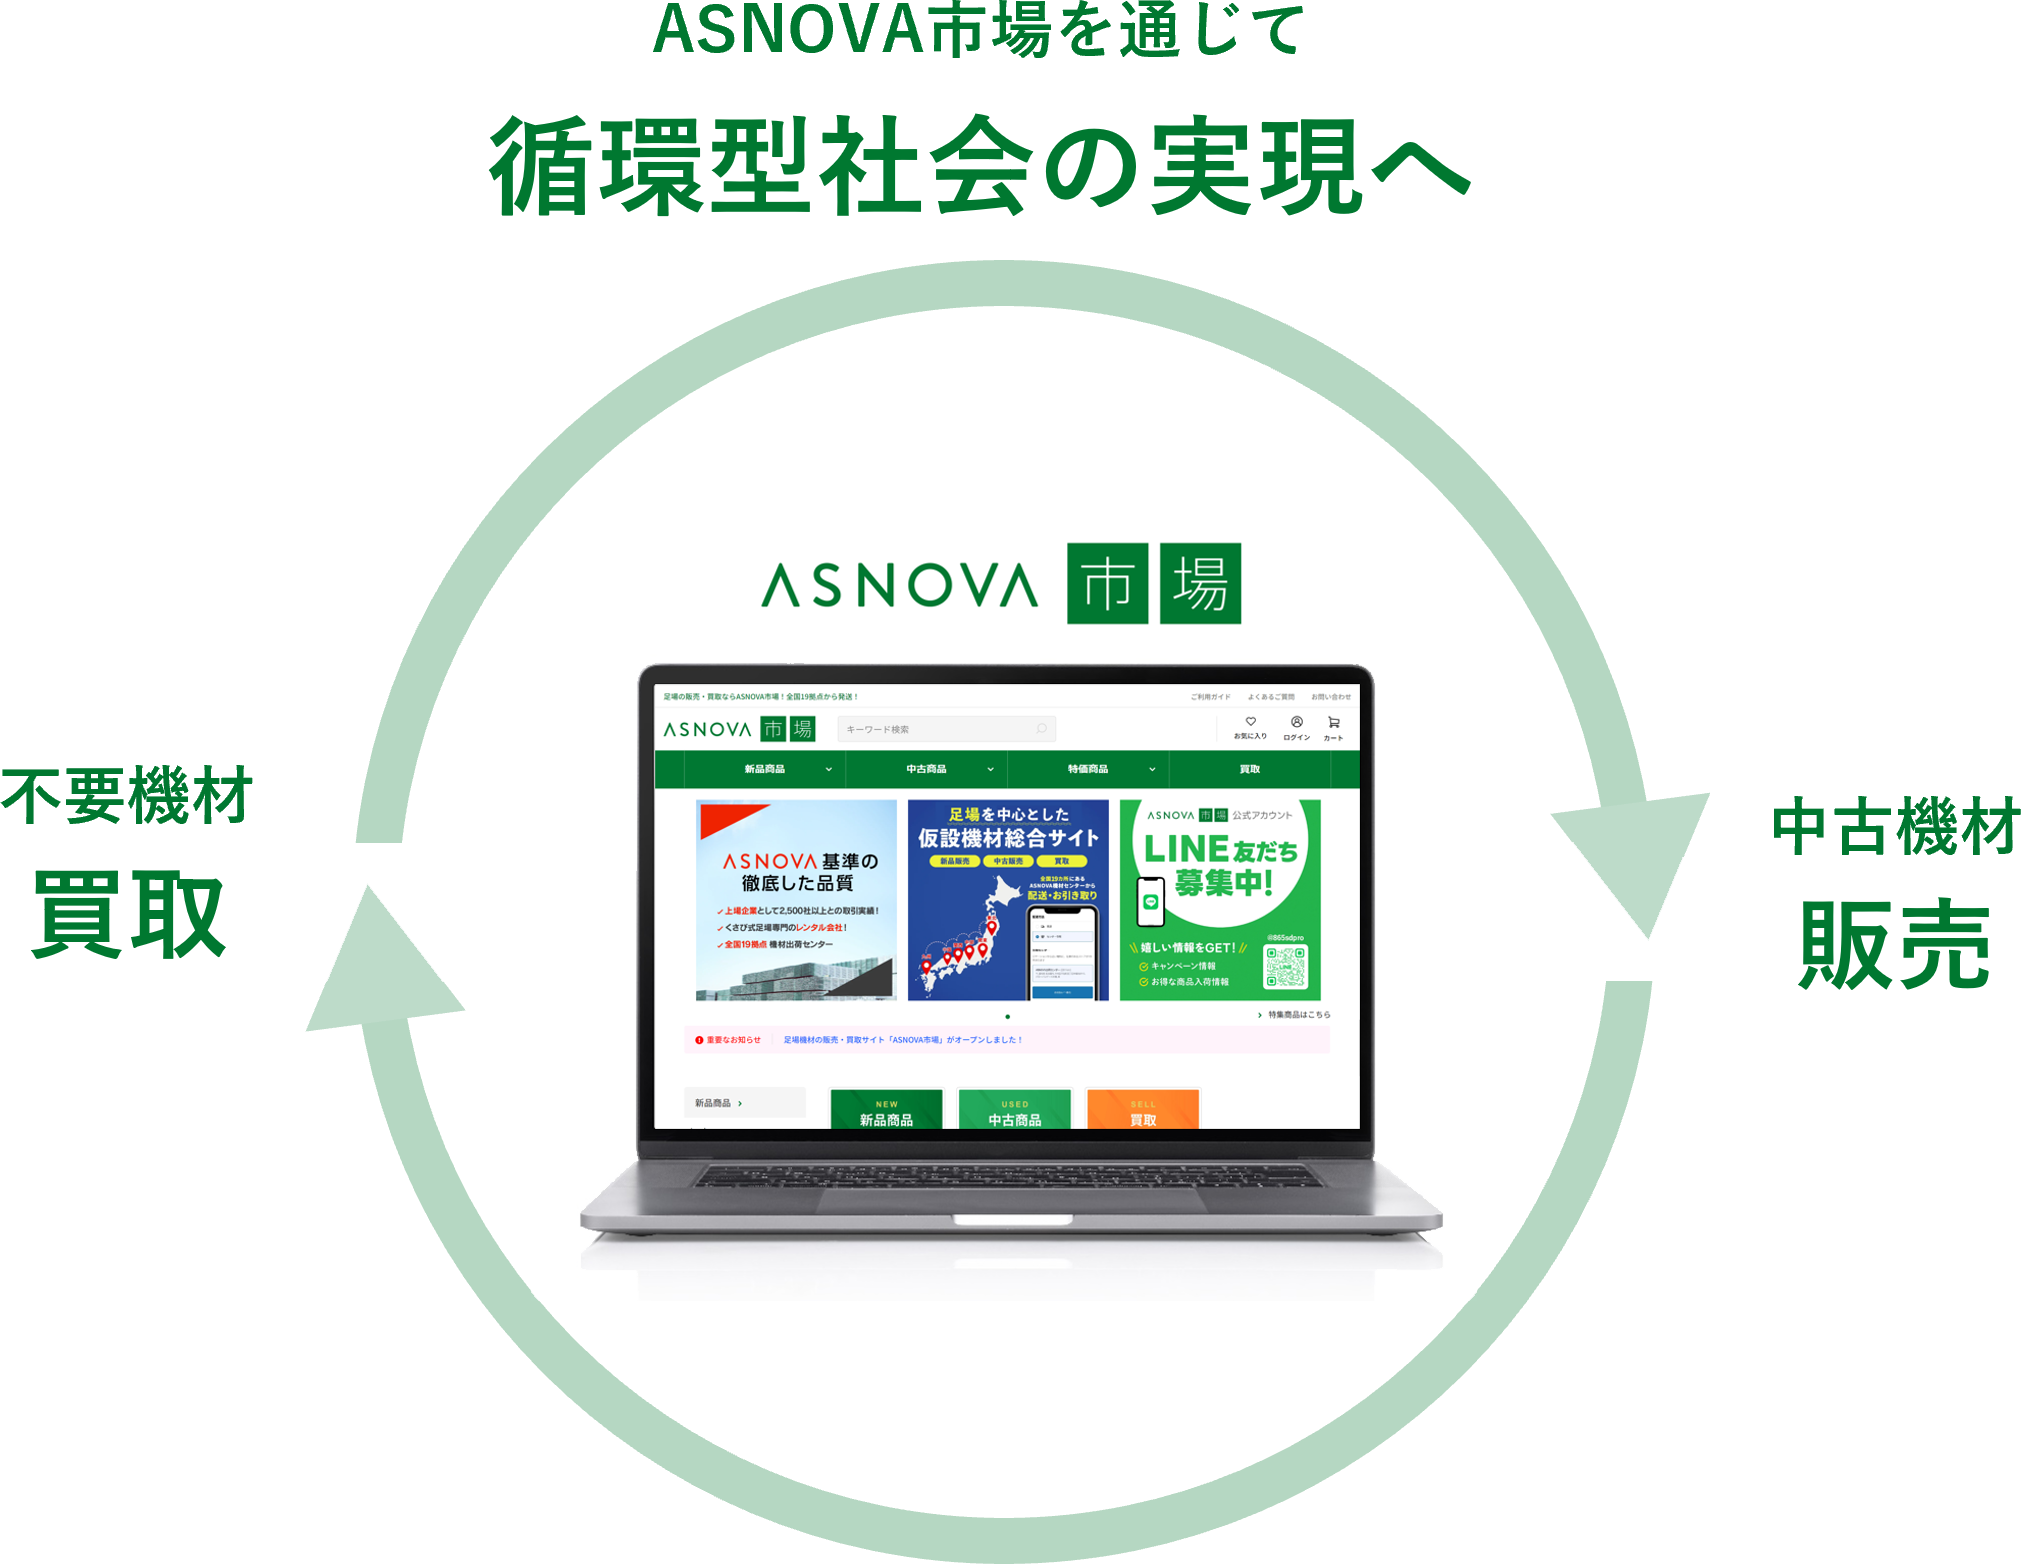 ASNOVA市場を通じて循環型社会の実現へ